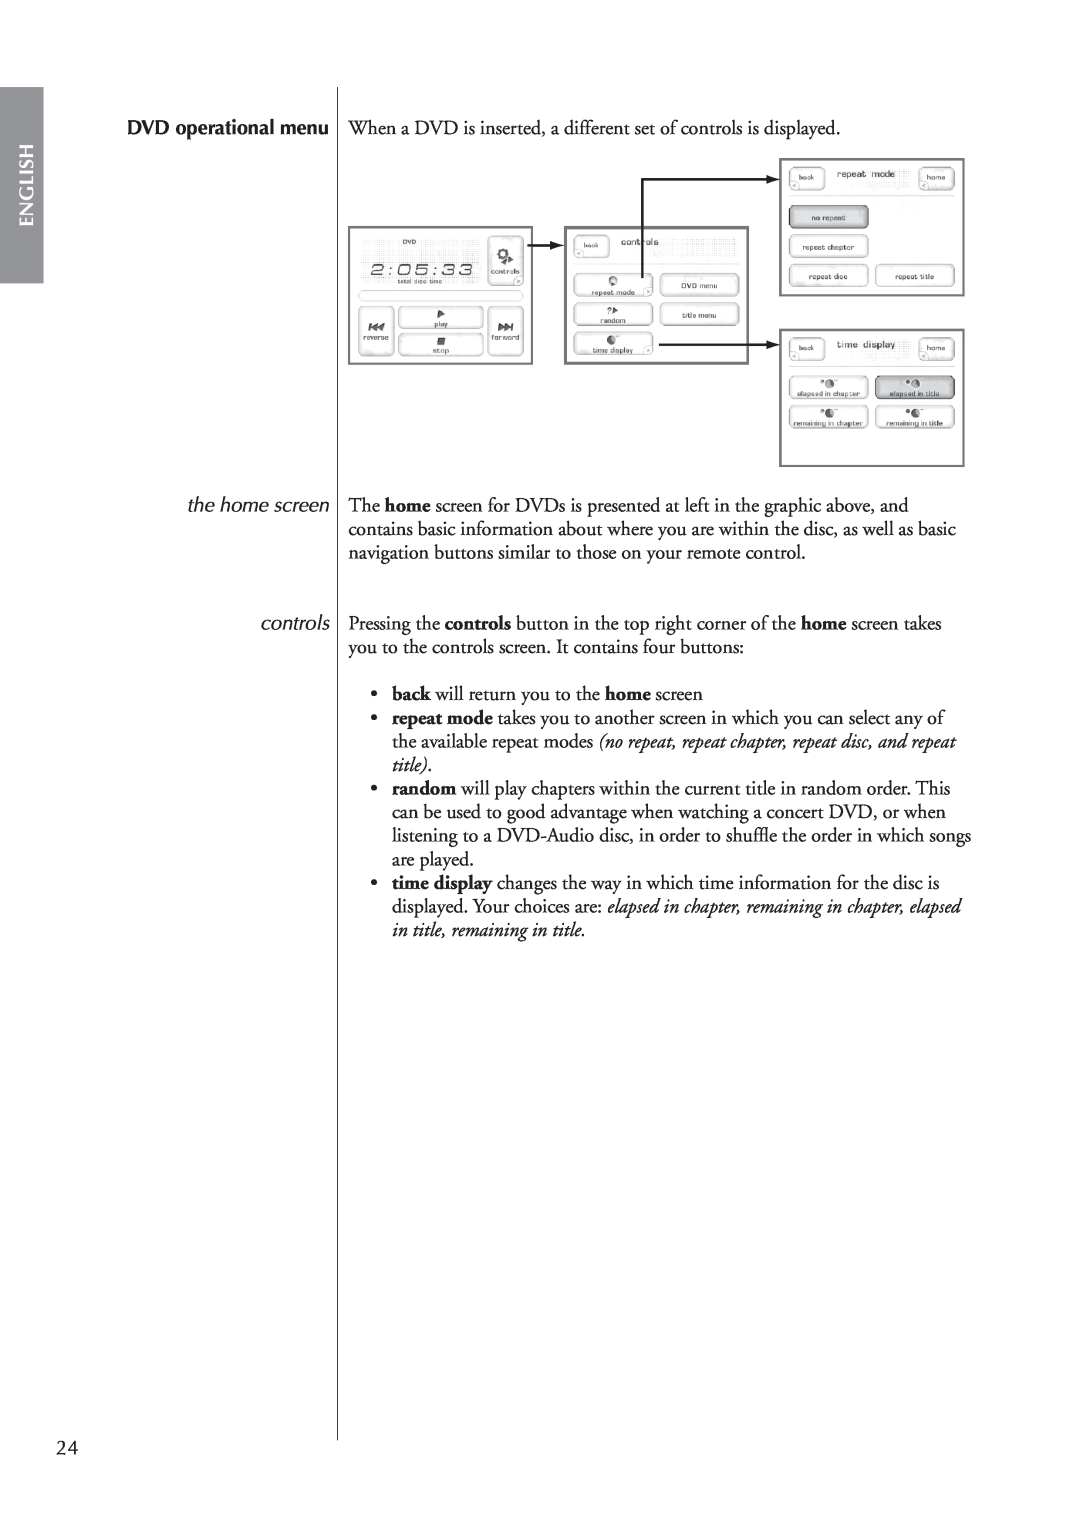 Classe Audio CDP-202 owner manual DVD operational menu, the home screen controls 